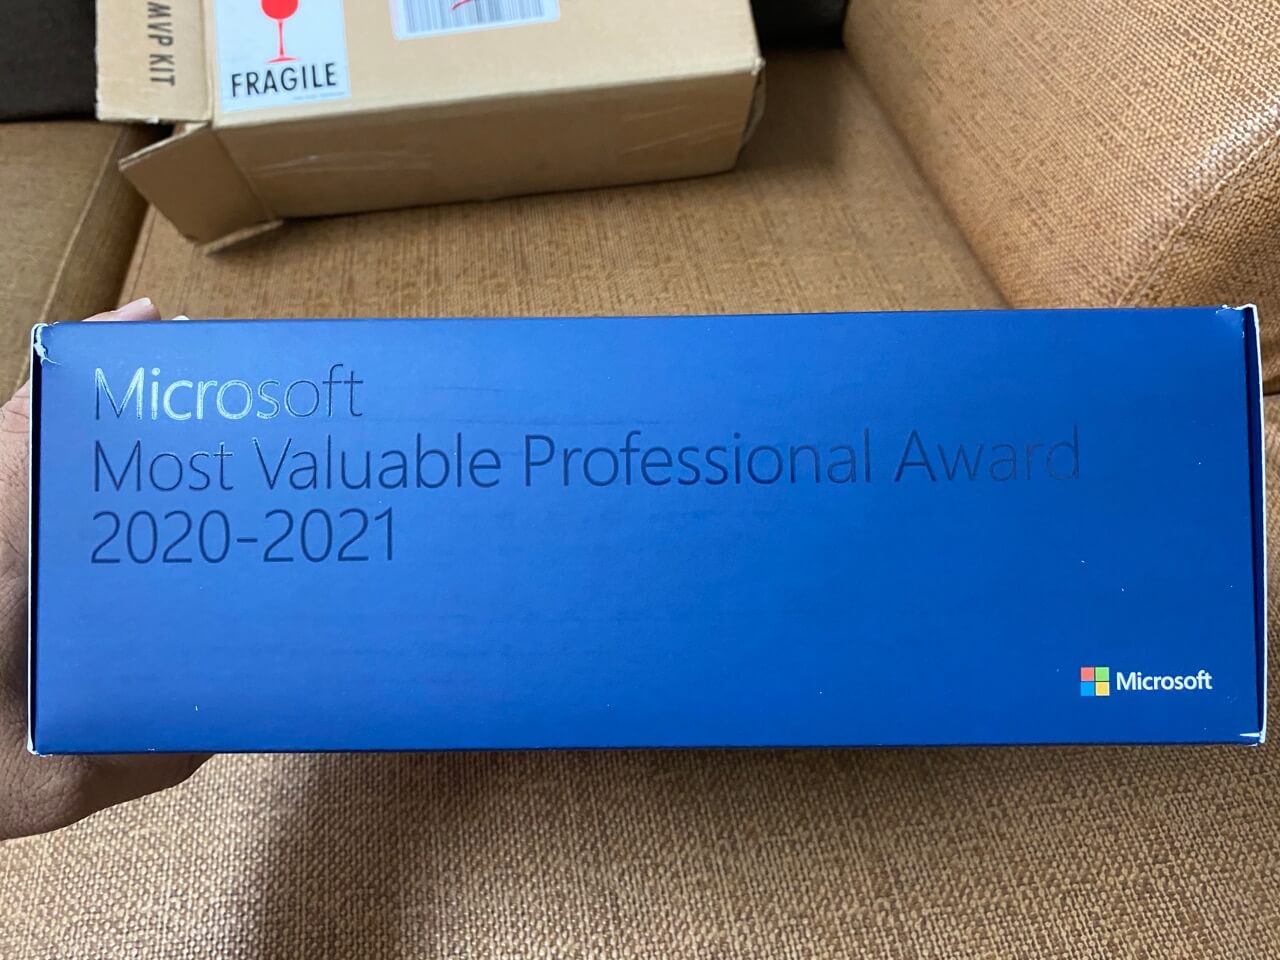 Ko Ko Microsoft MVP Award Unboxing